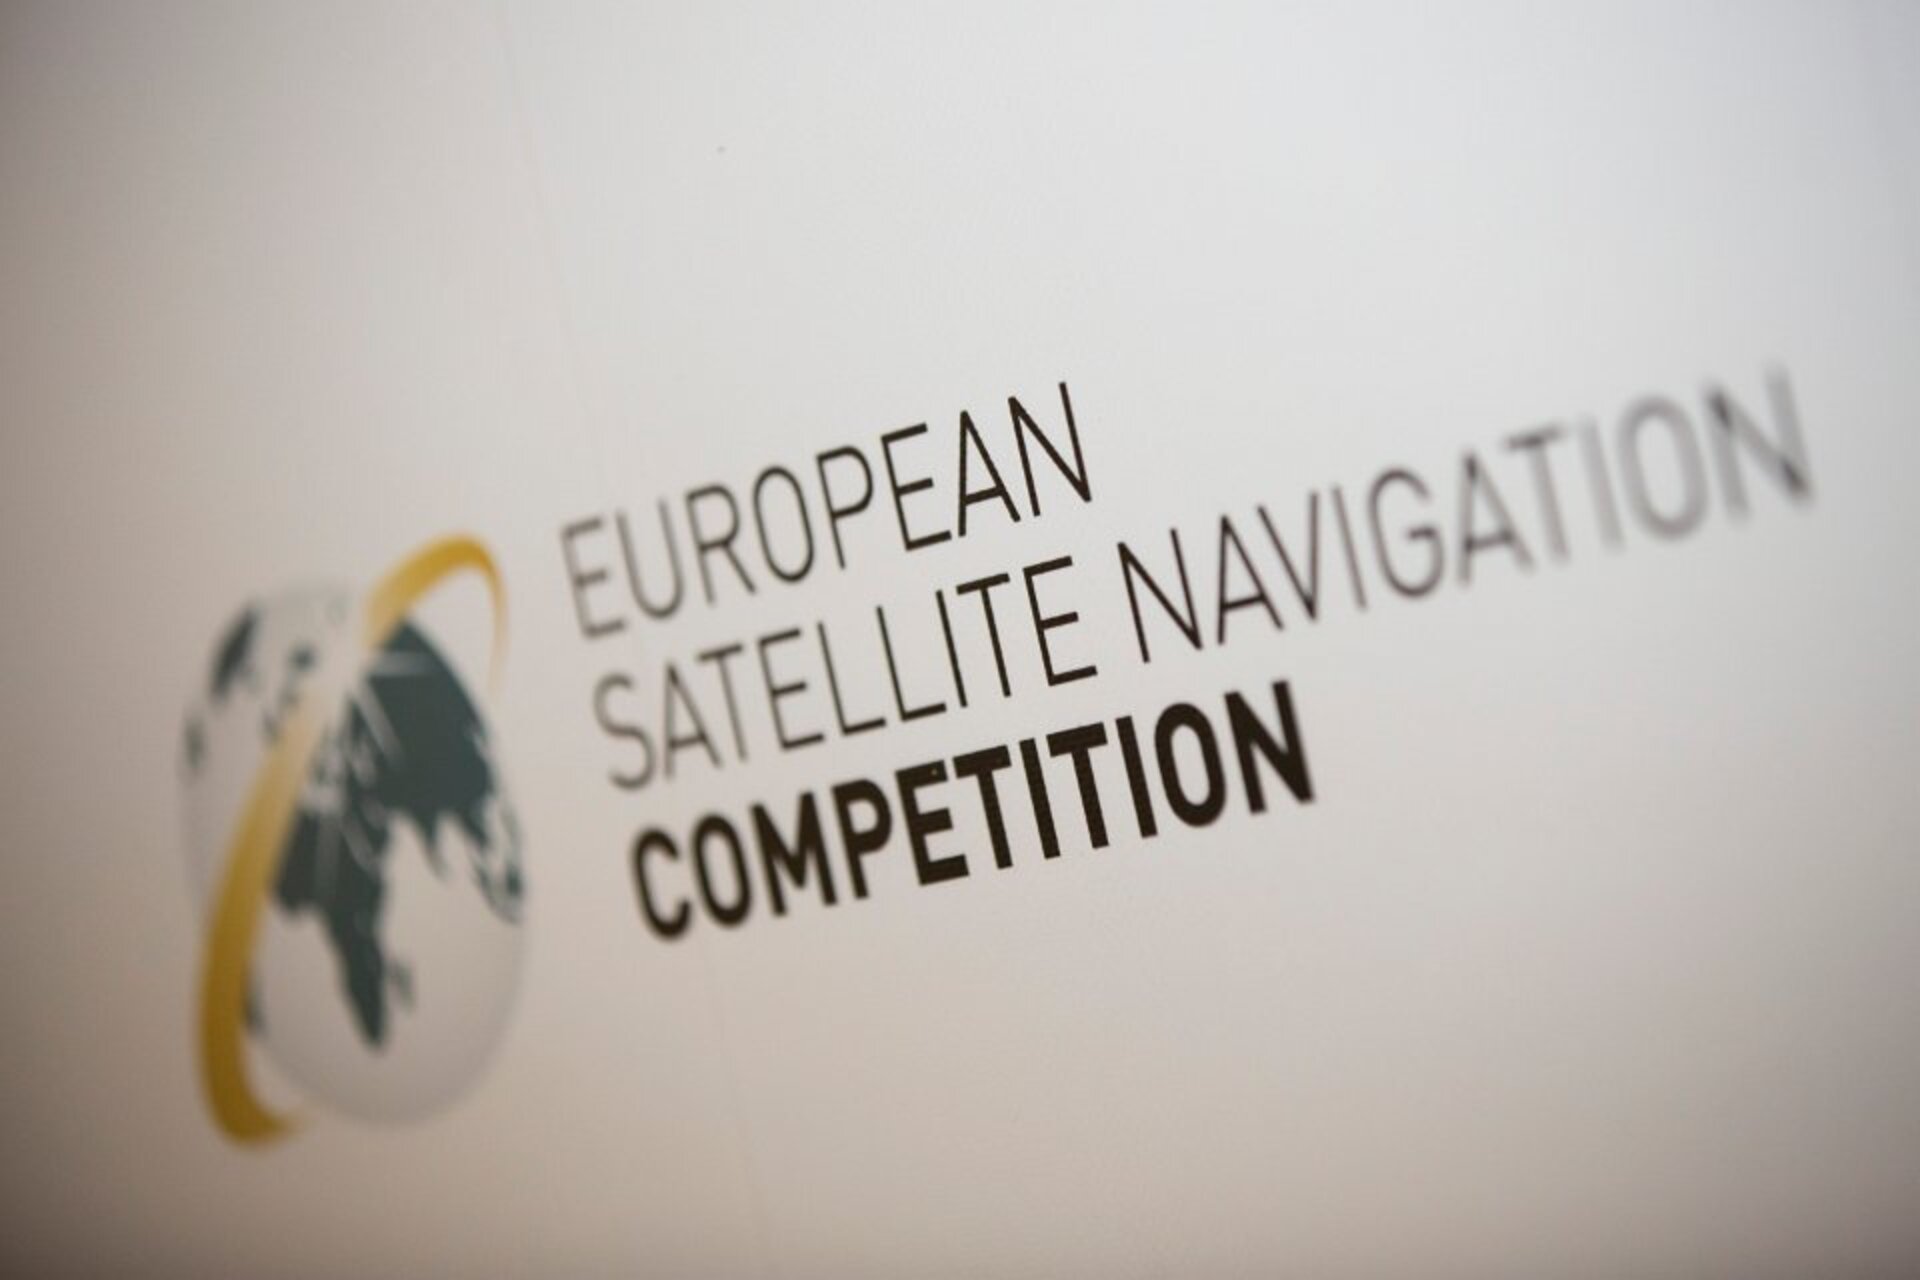 European Satellite Navigation Competition - ESNC 2017